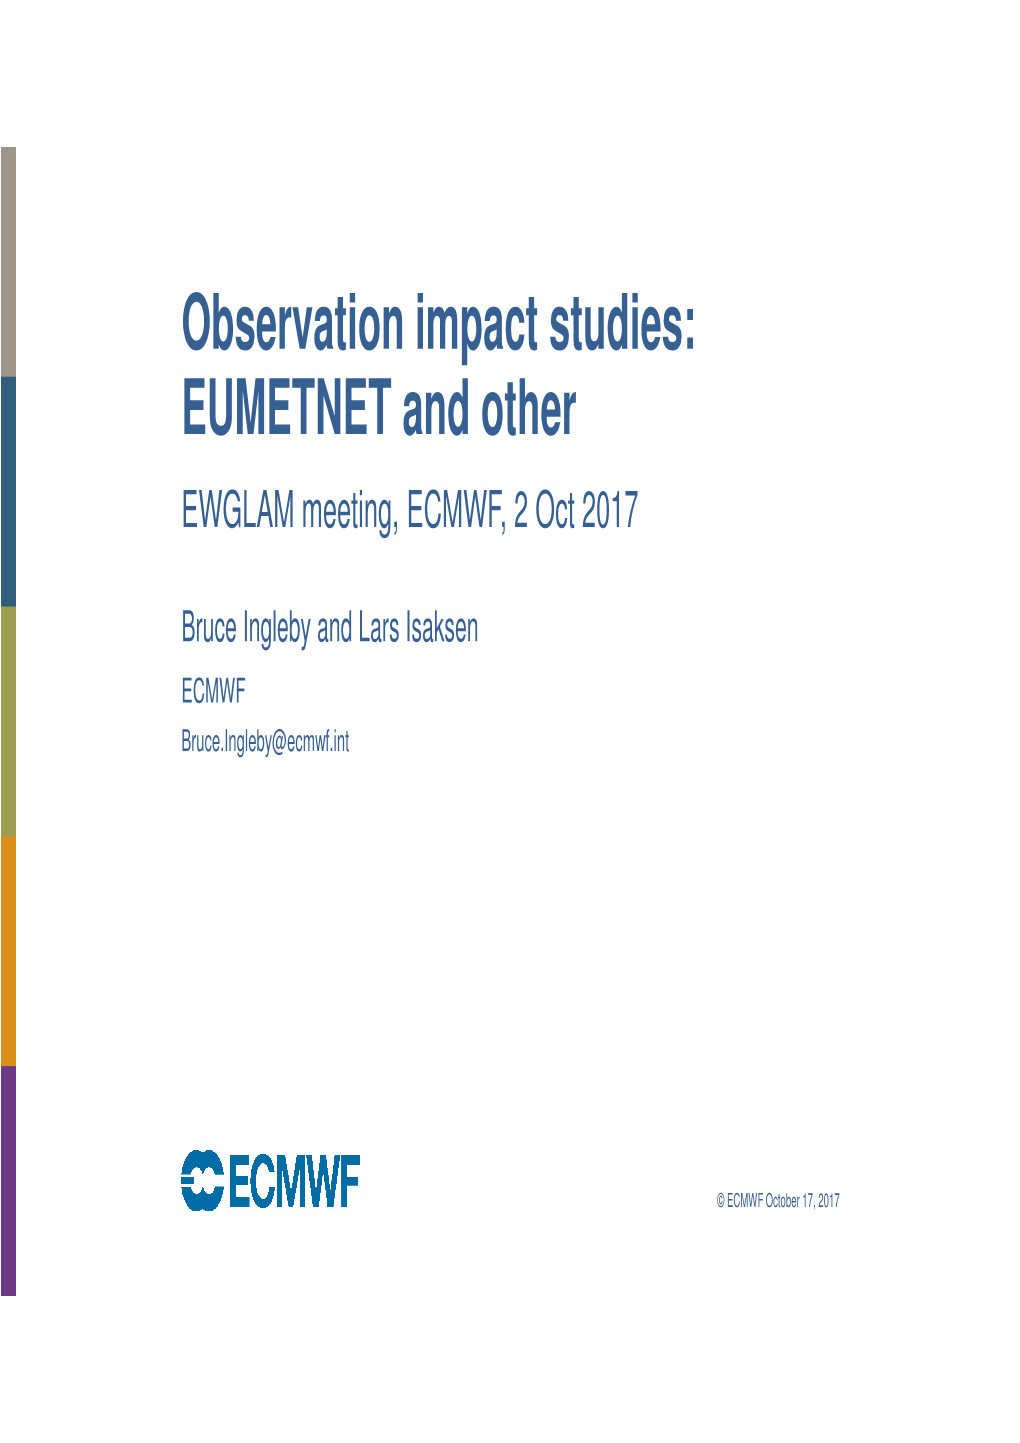 (Bruce Ingleby): EUMETNET Observation Impact Studies